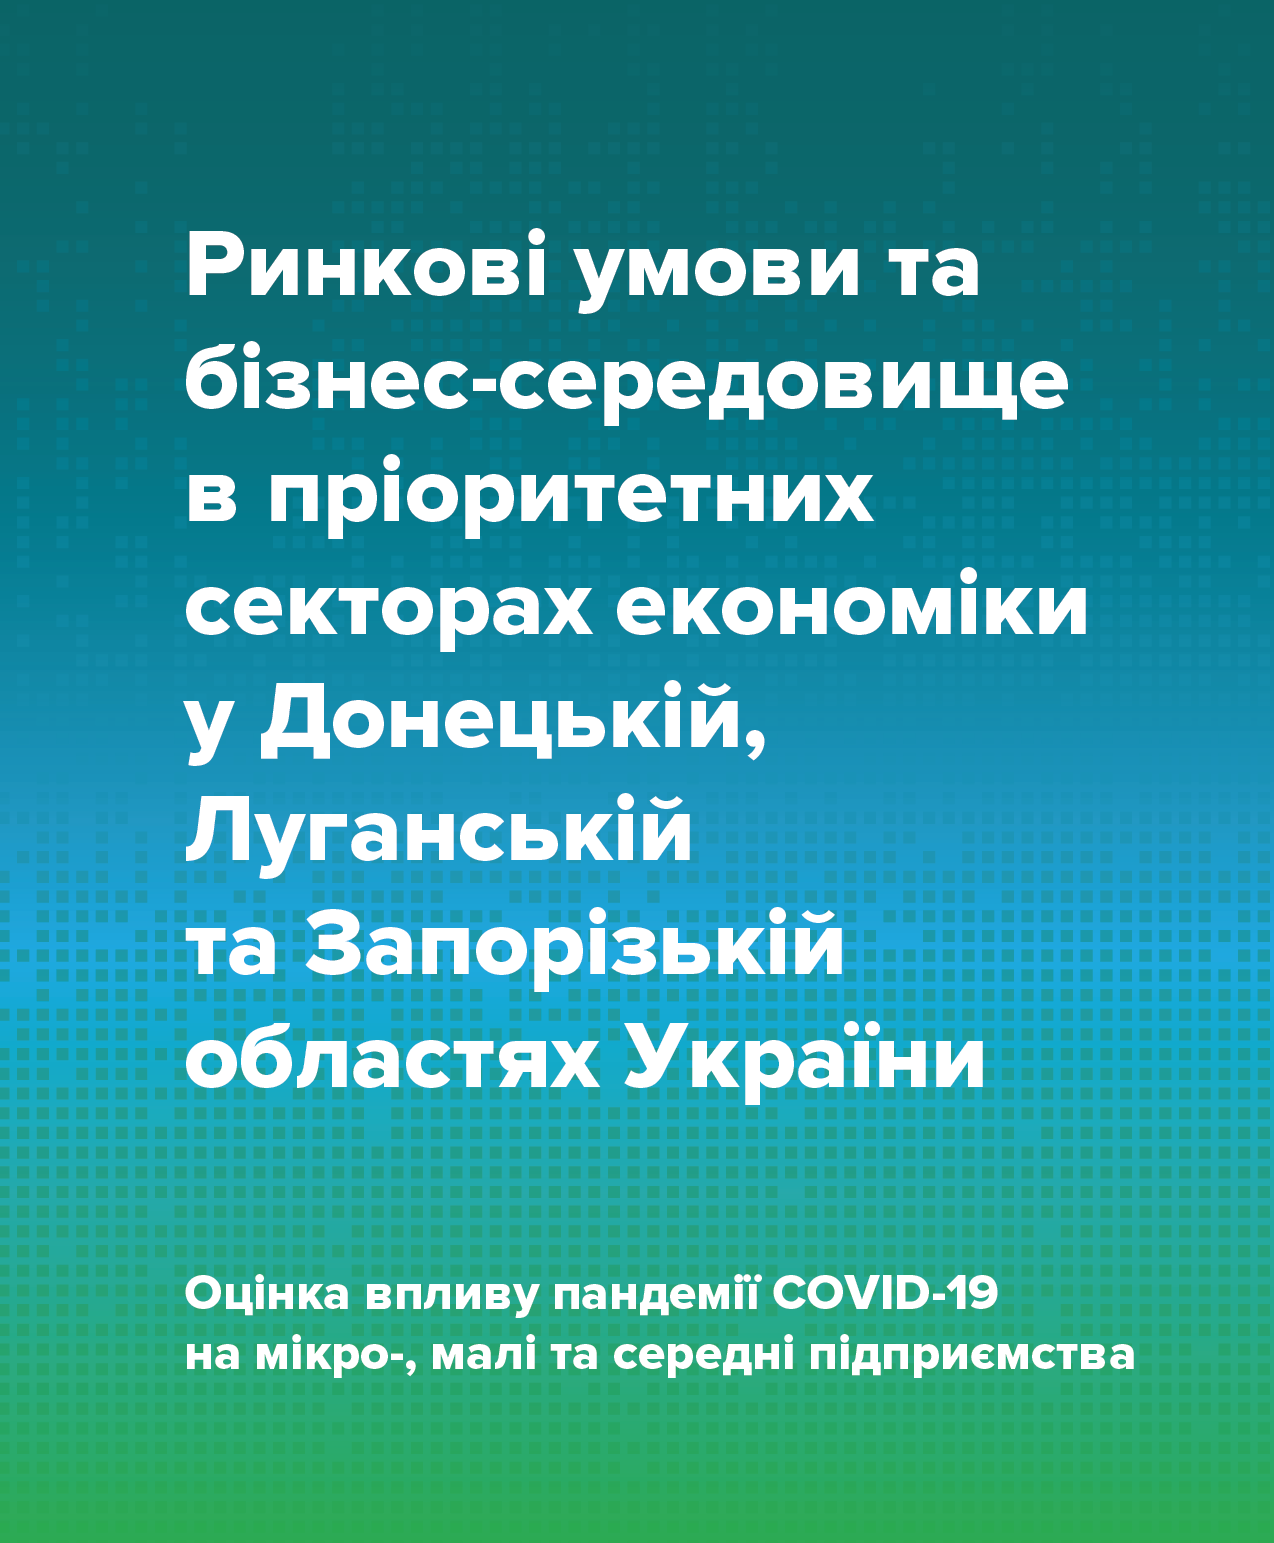 UNDP_Business environment_COVID-19_KSE_ukr_web